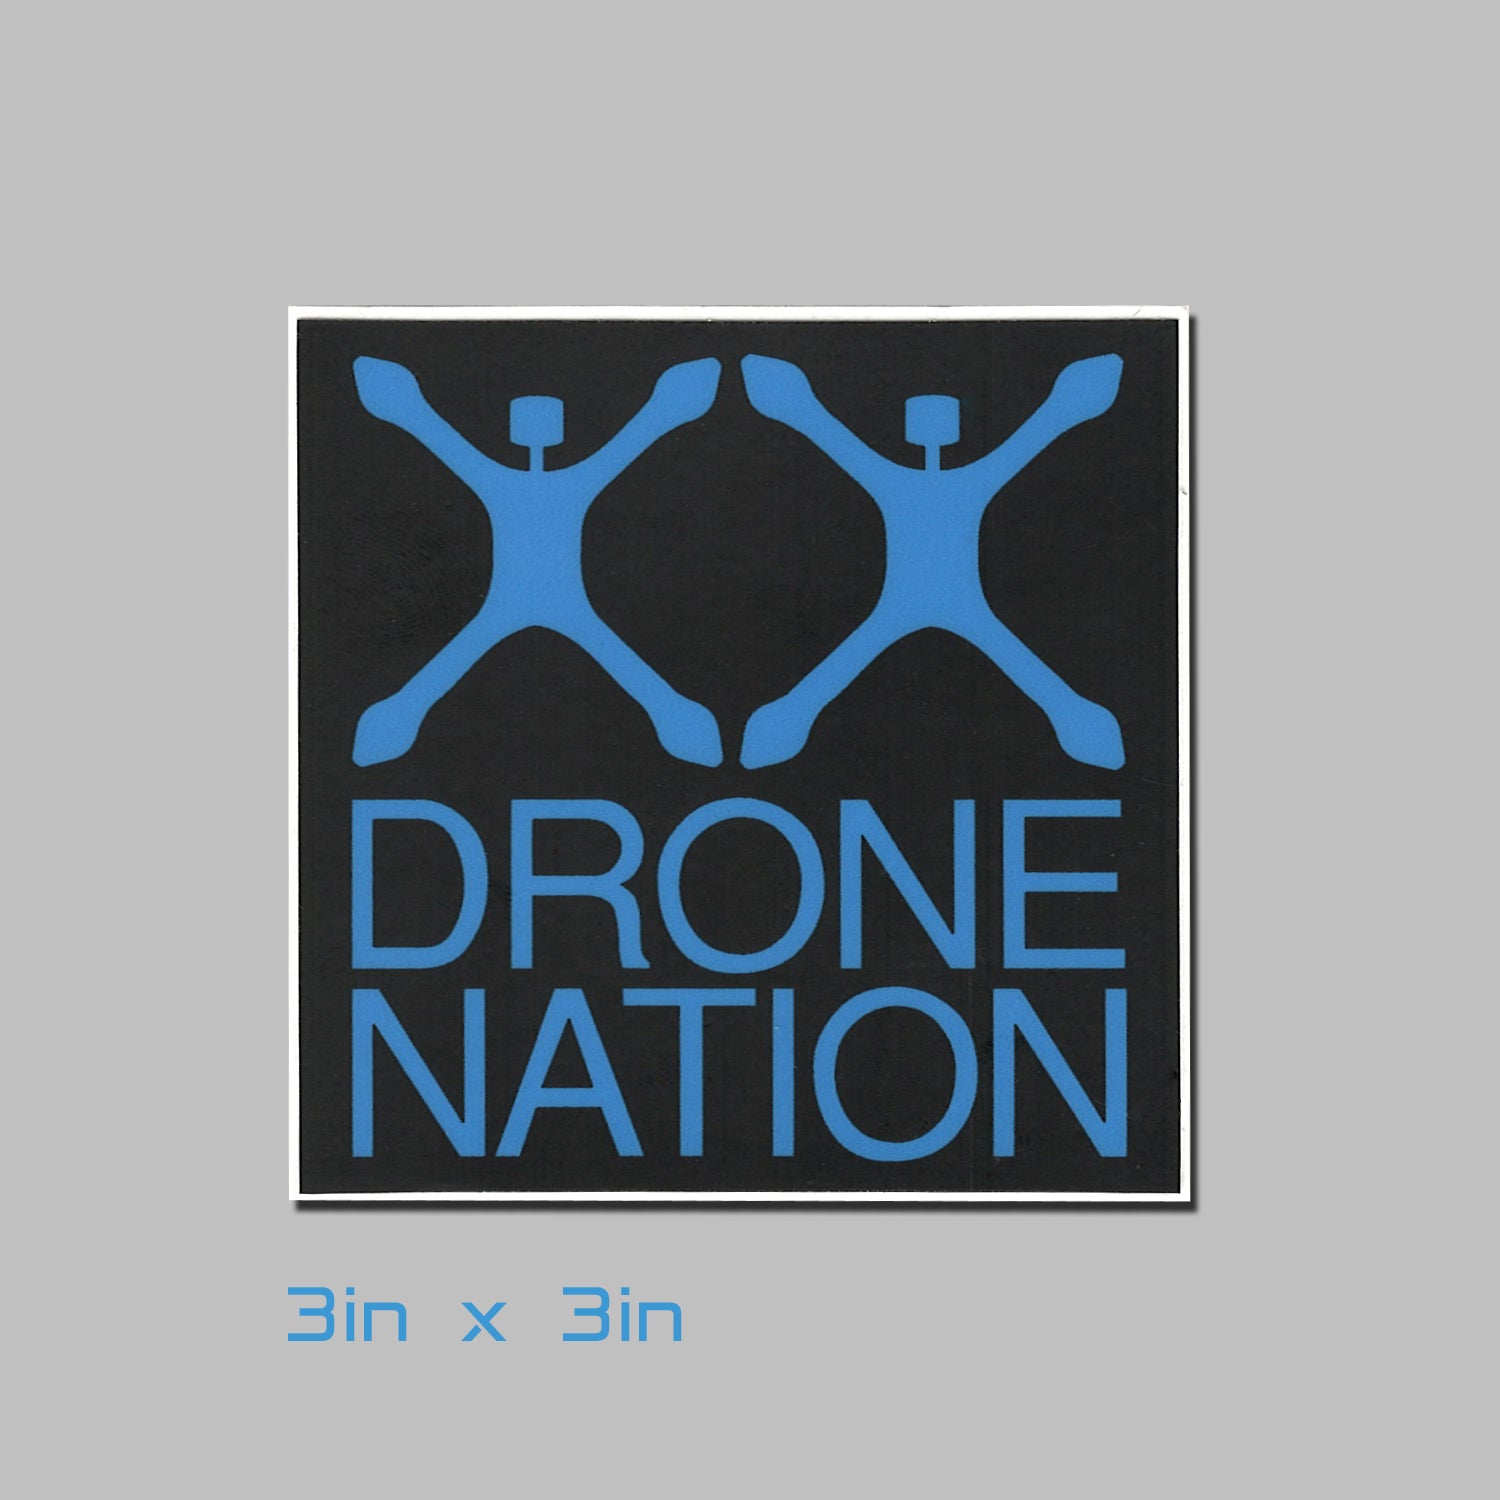 Drone Nation 3x3in Blue on Black Sticker